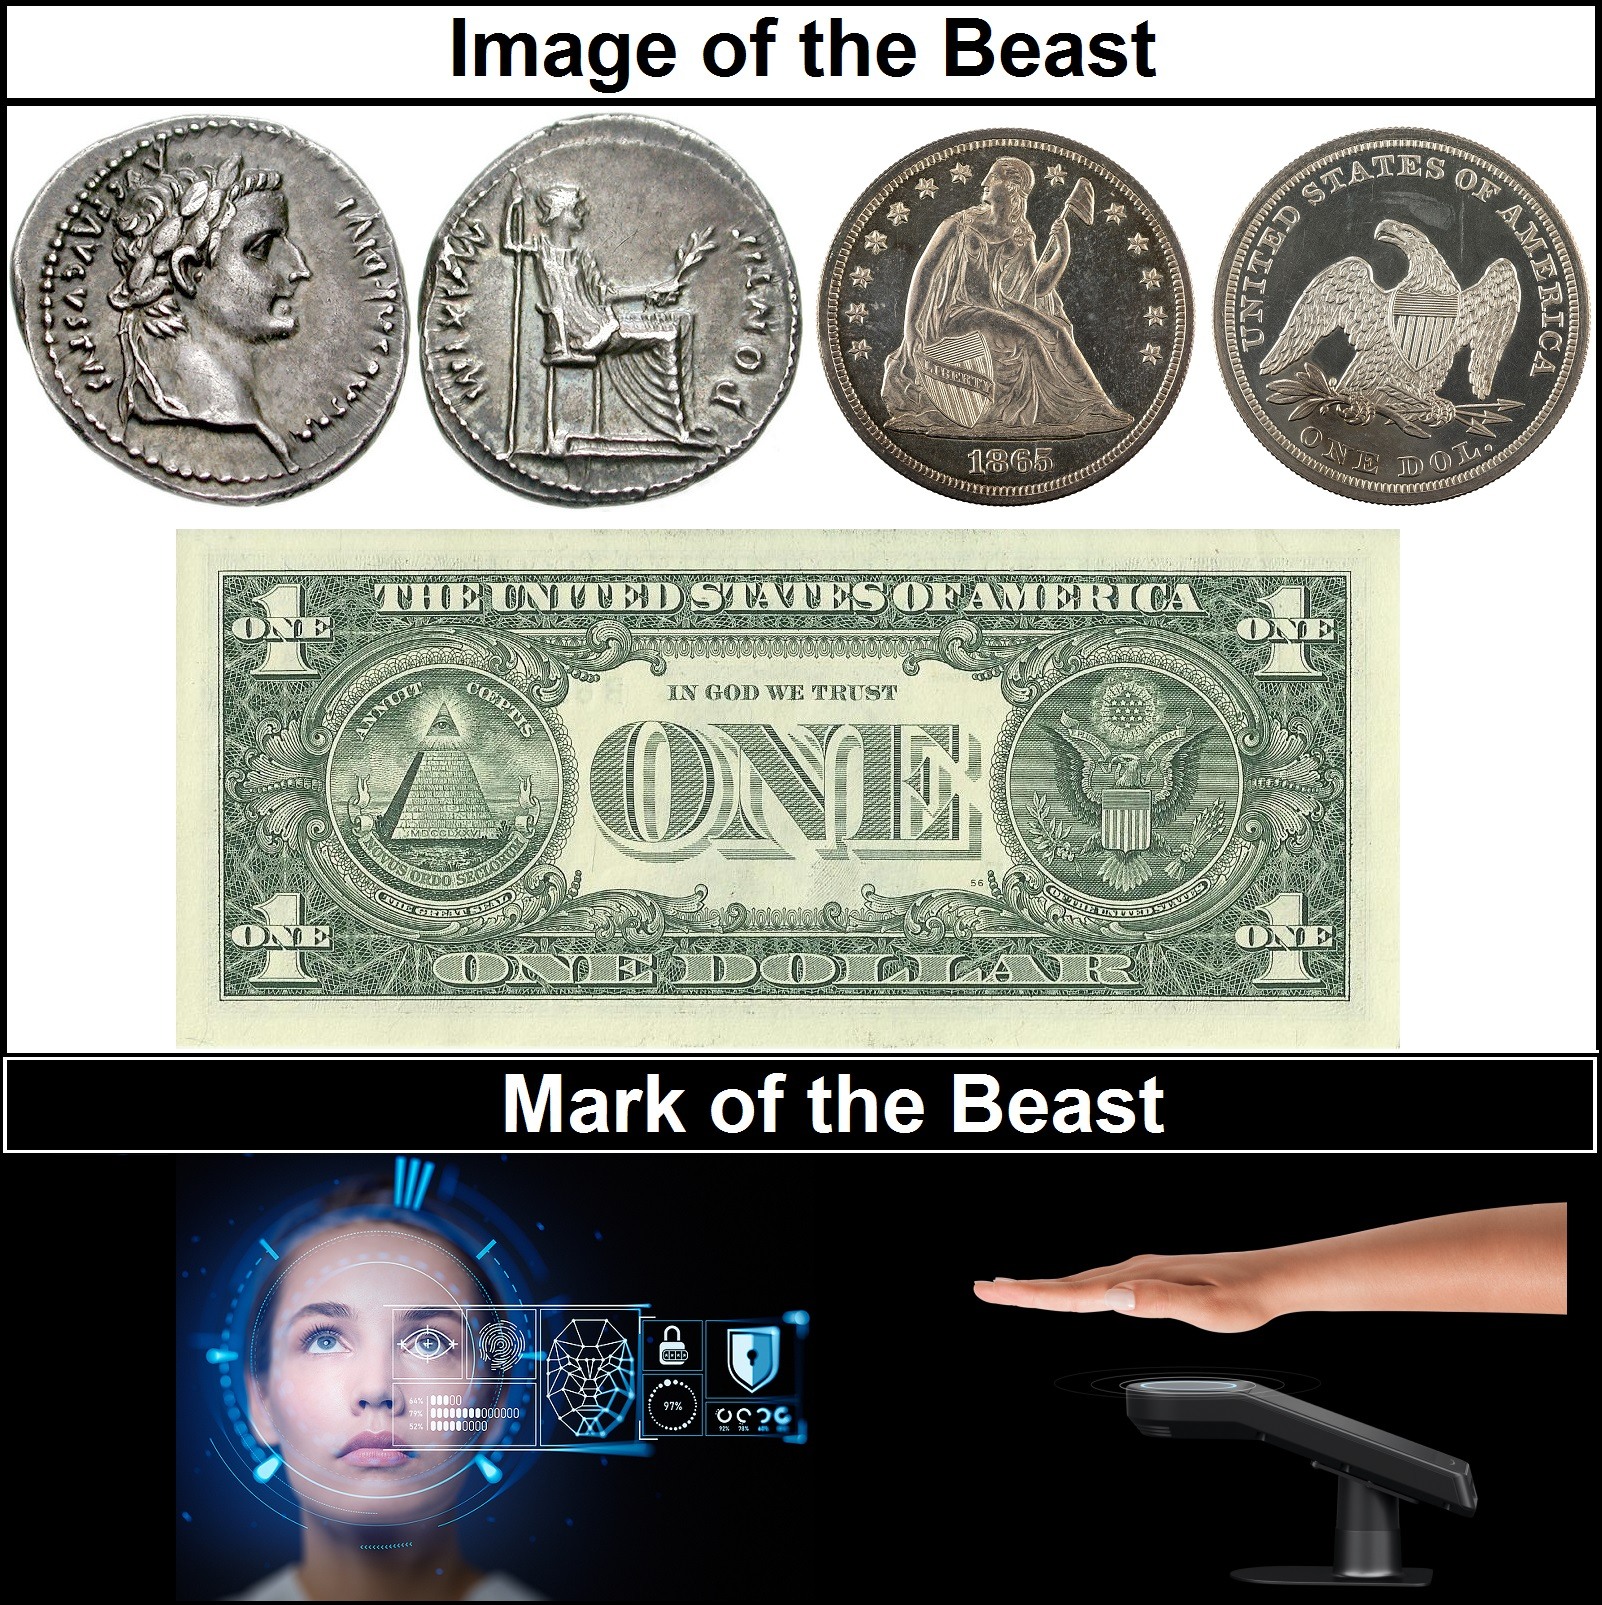 Roman and U.S. Money image of beast mark of beast technology 2